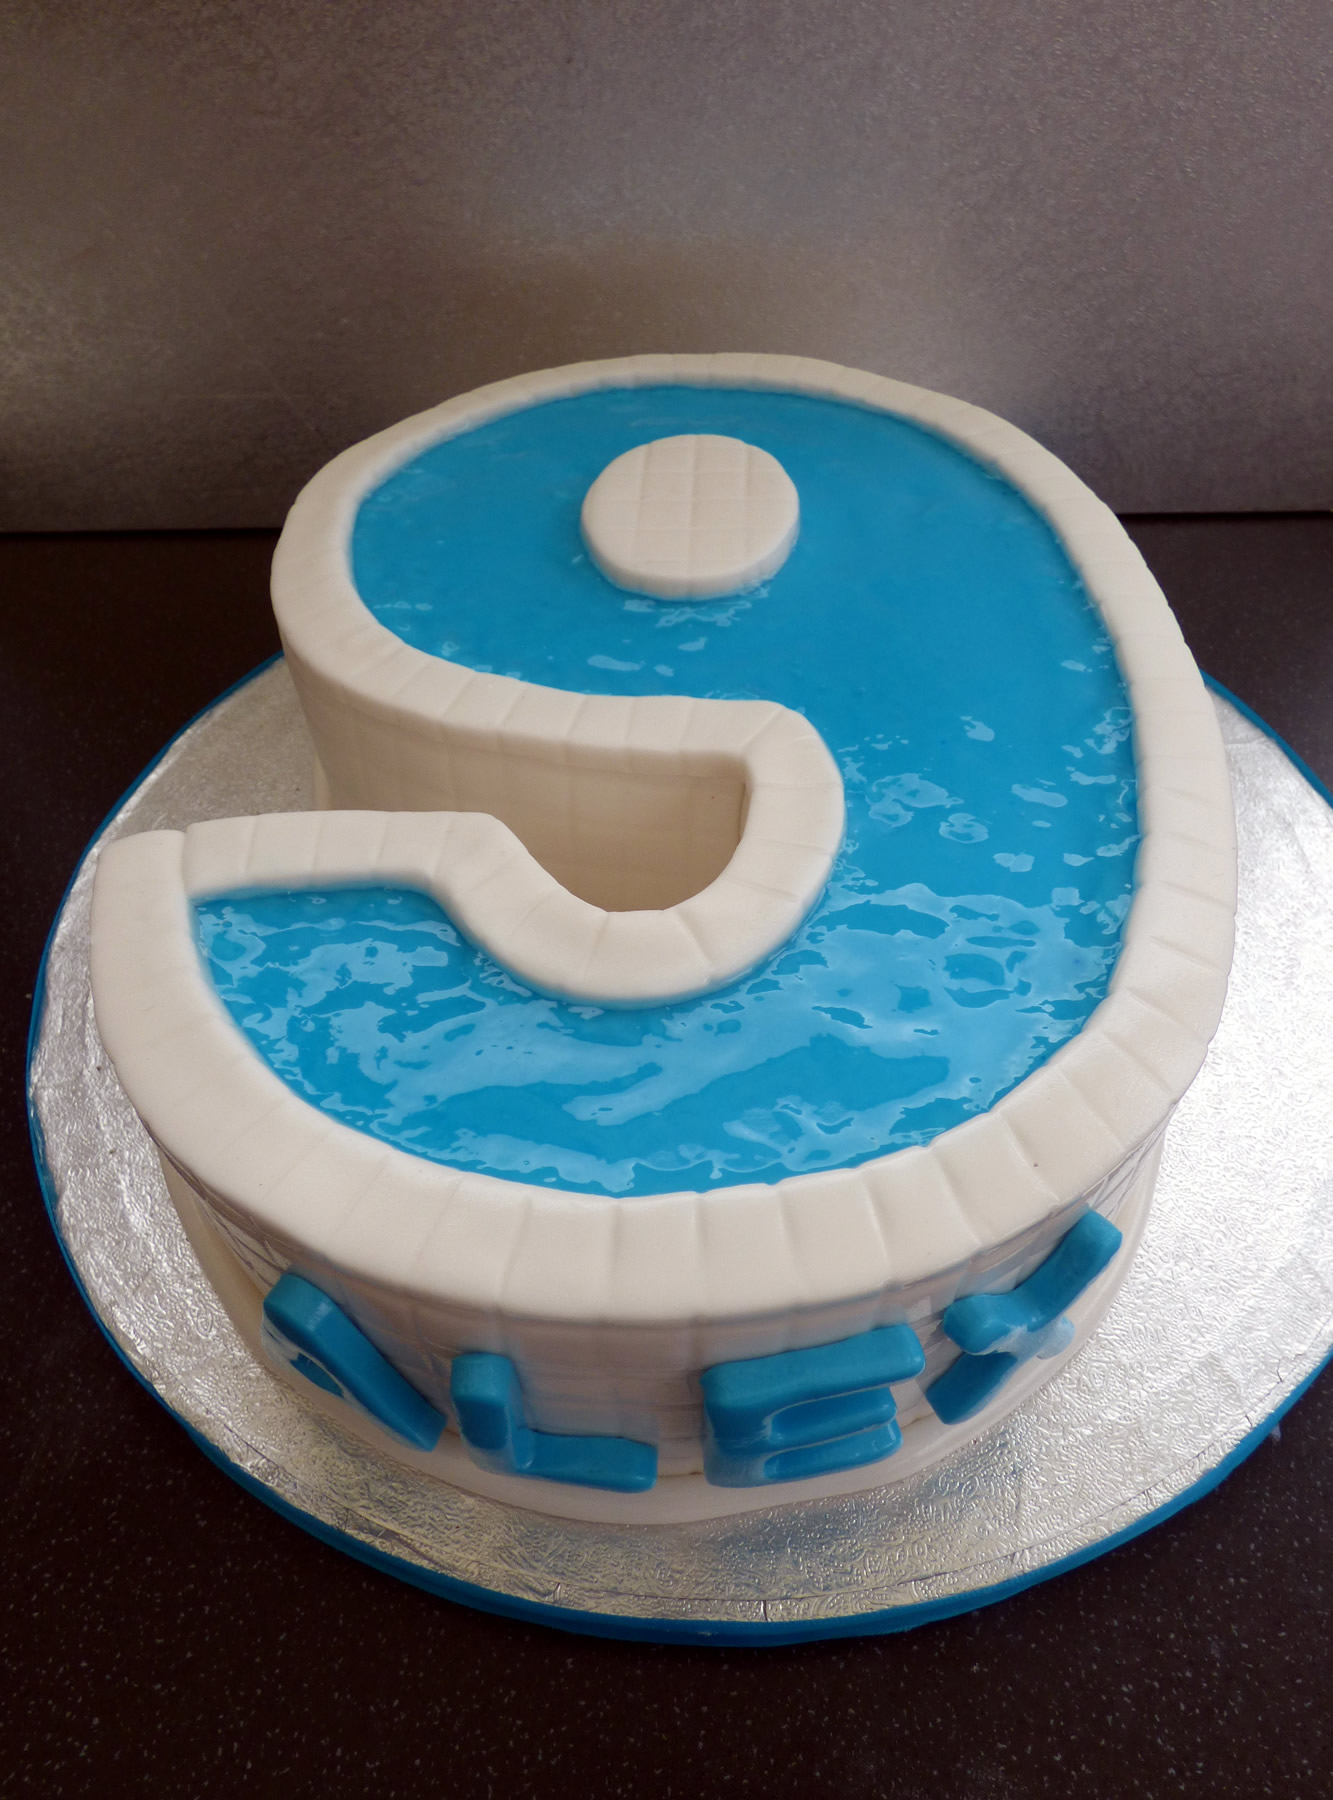 62 Pool party cakes ideas | pool party cakes, party cakes, pool cake